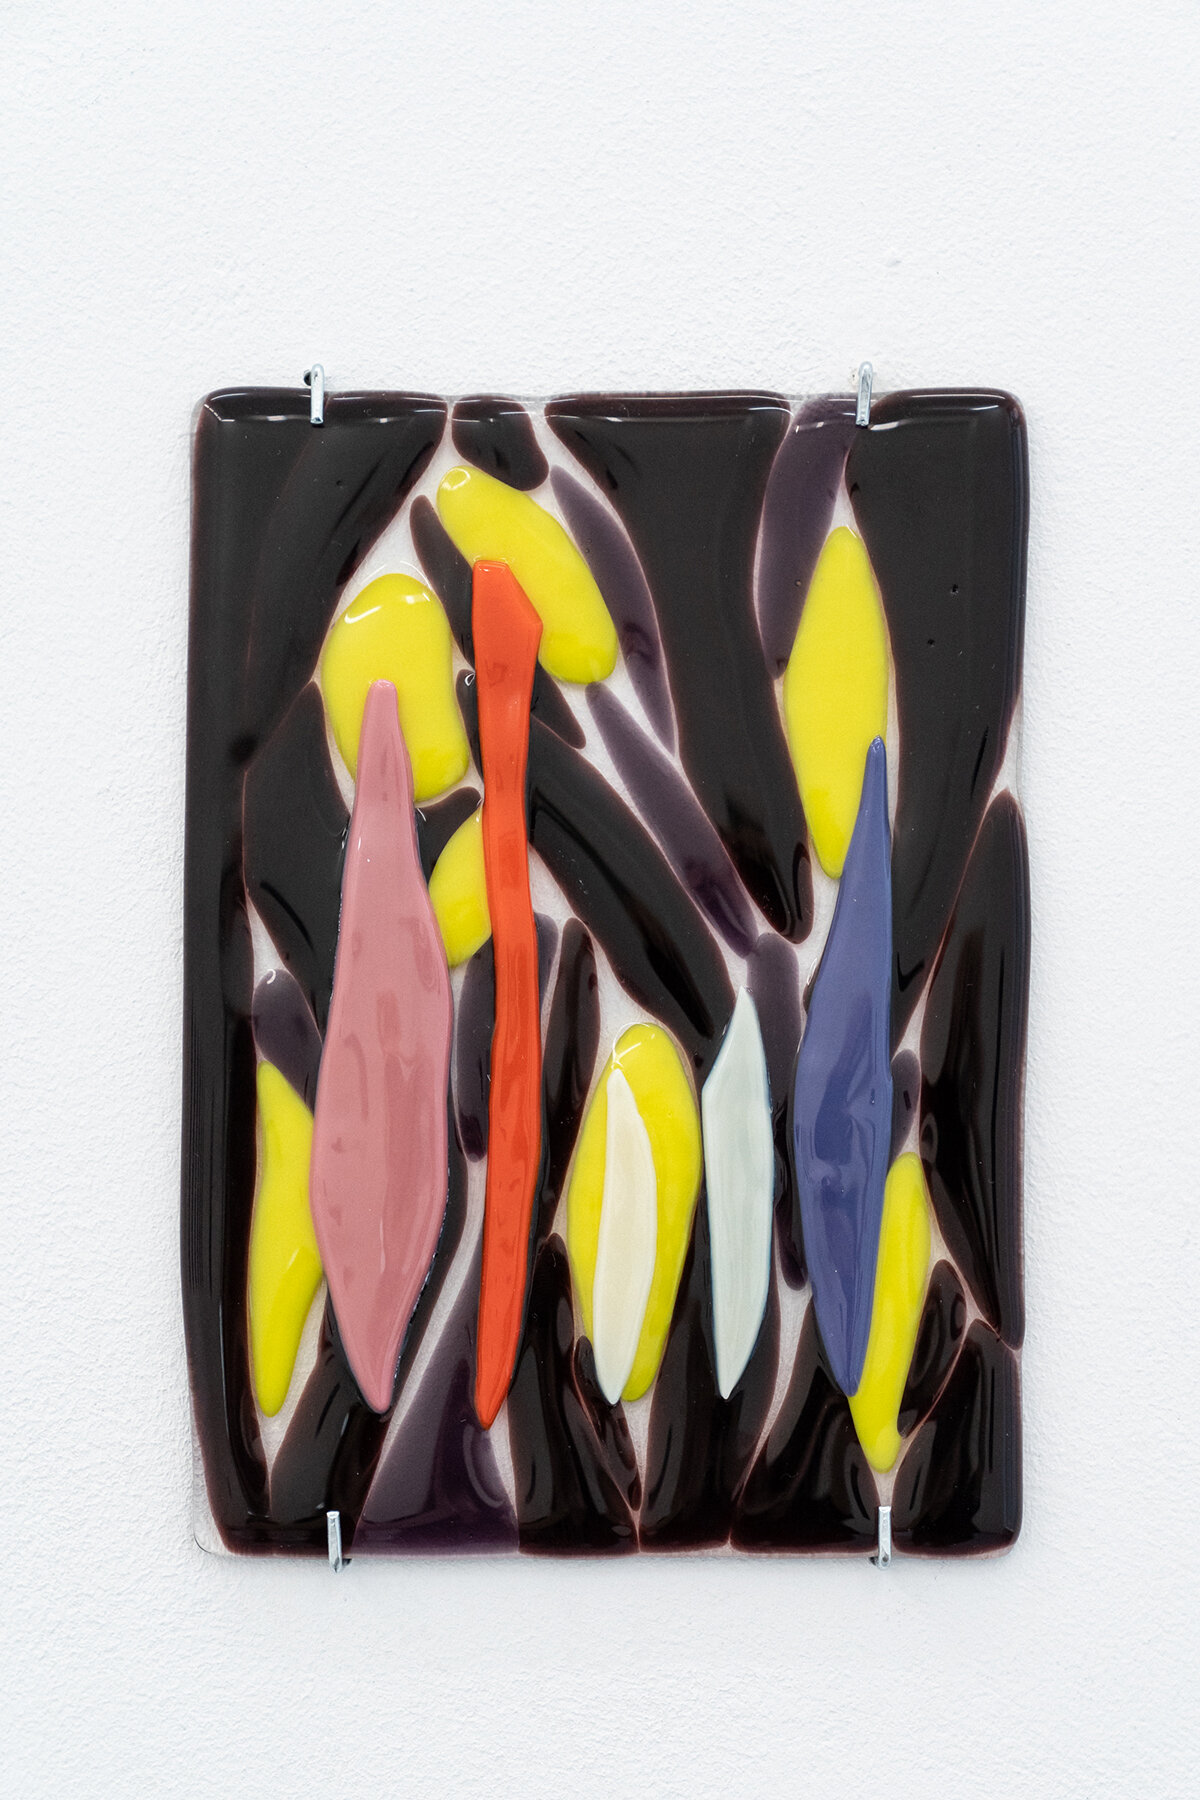 Elisabeth Greinecker, Untitled, glass and nails, 15  x 21 cm, 2021